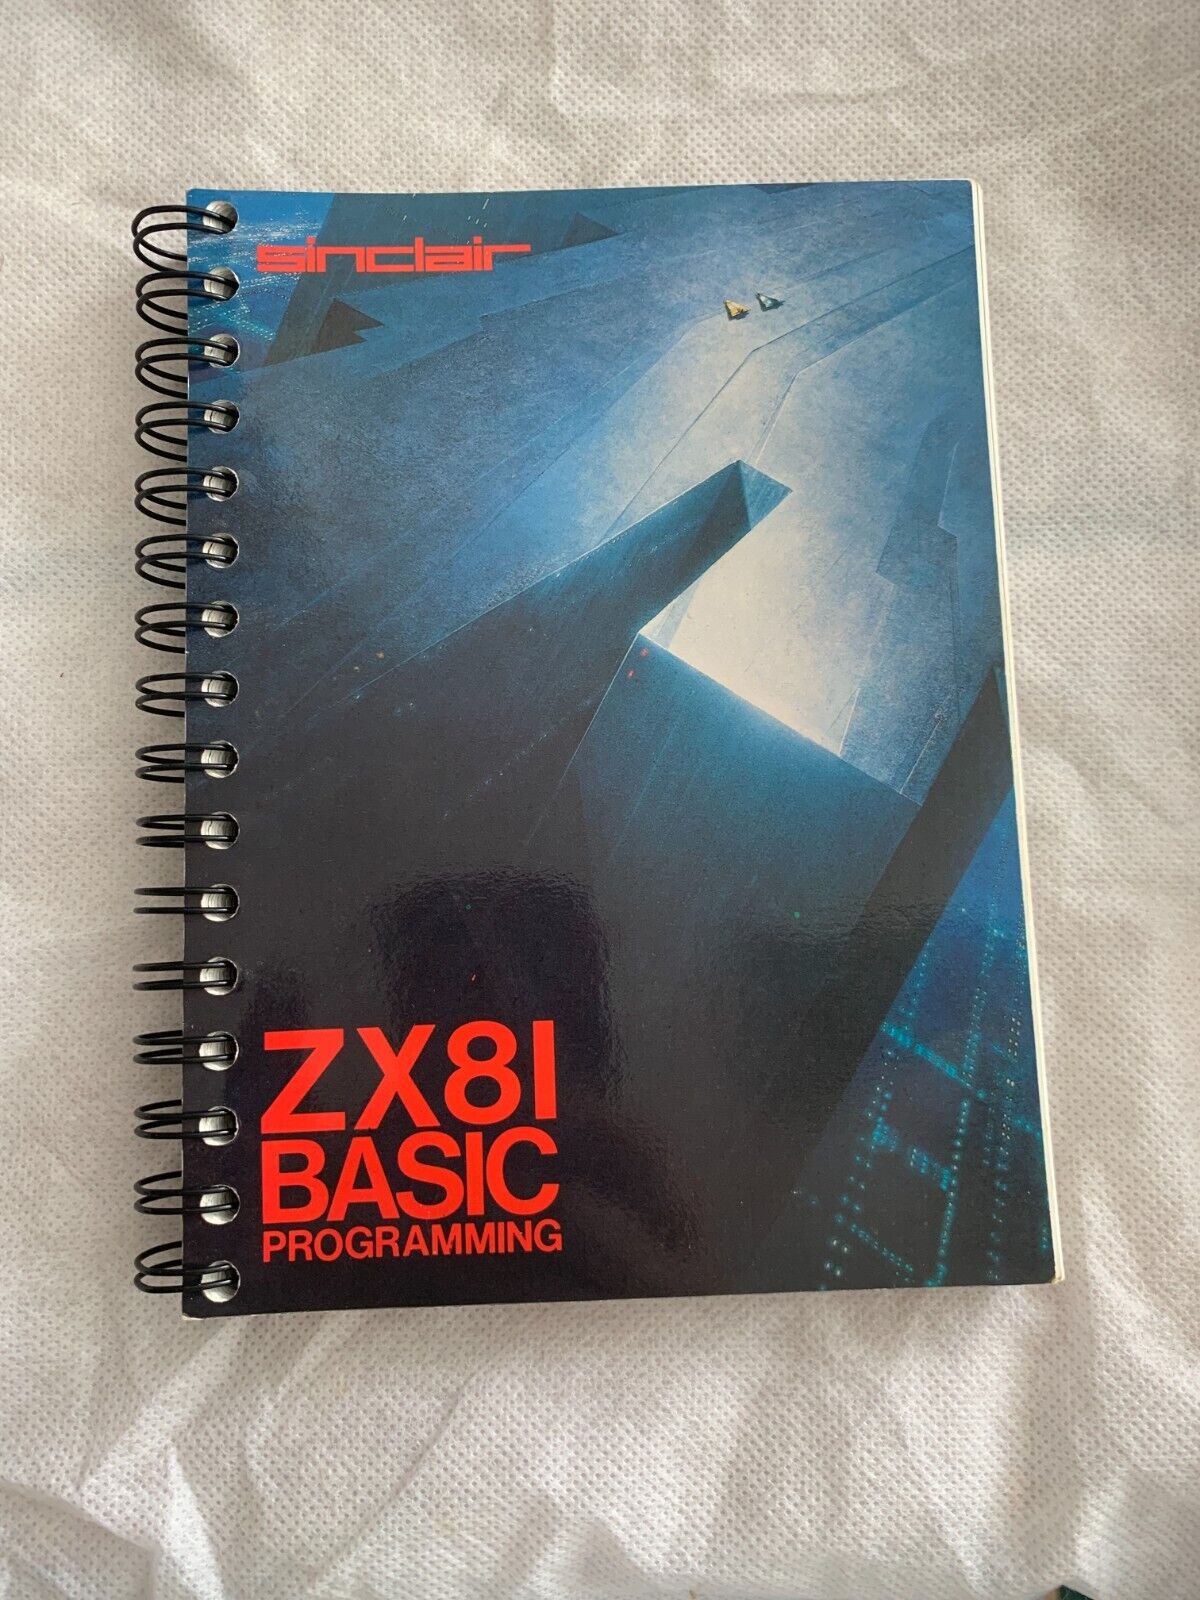 SINCLAIR ZX81 BASIC PROGRAMMING